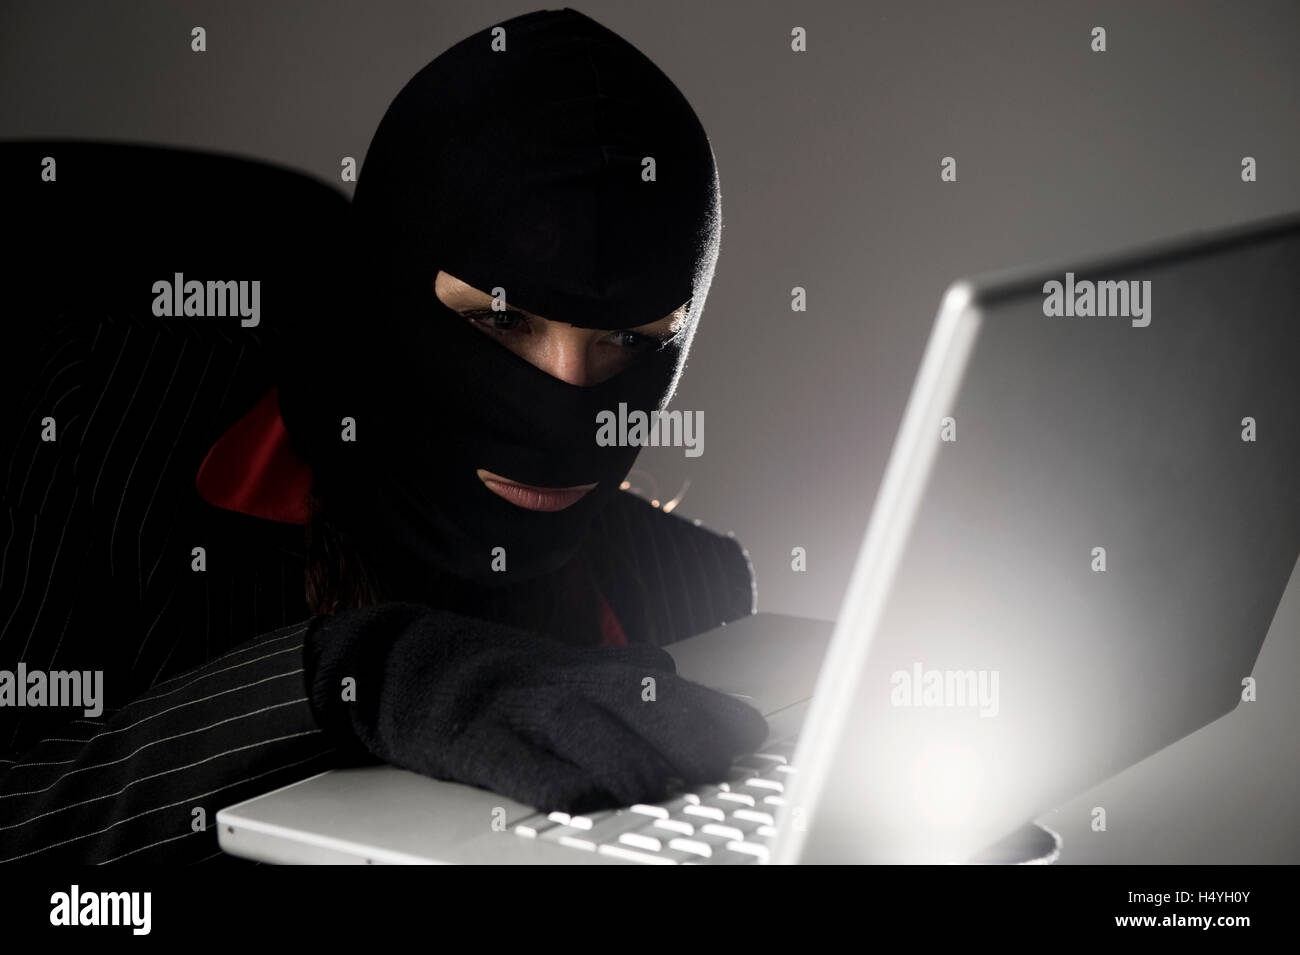 Masked burglar with a laptop, economic espionage, data piracy Stock Photo